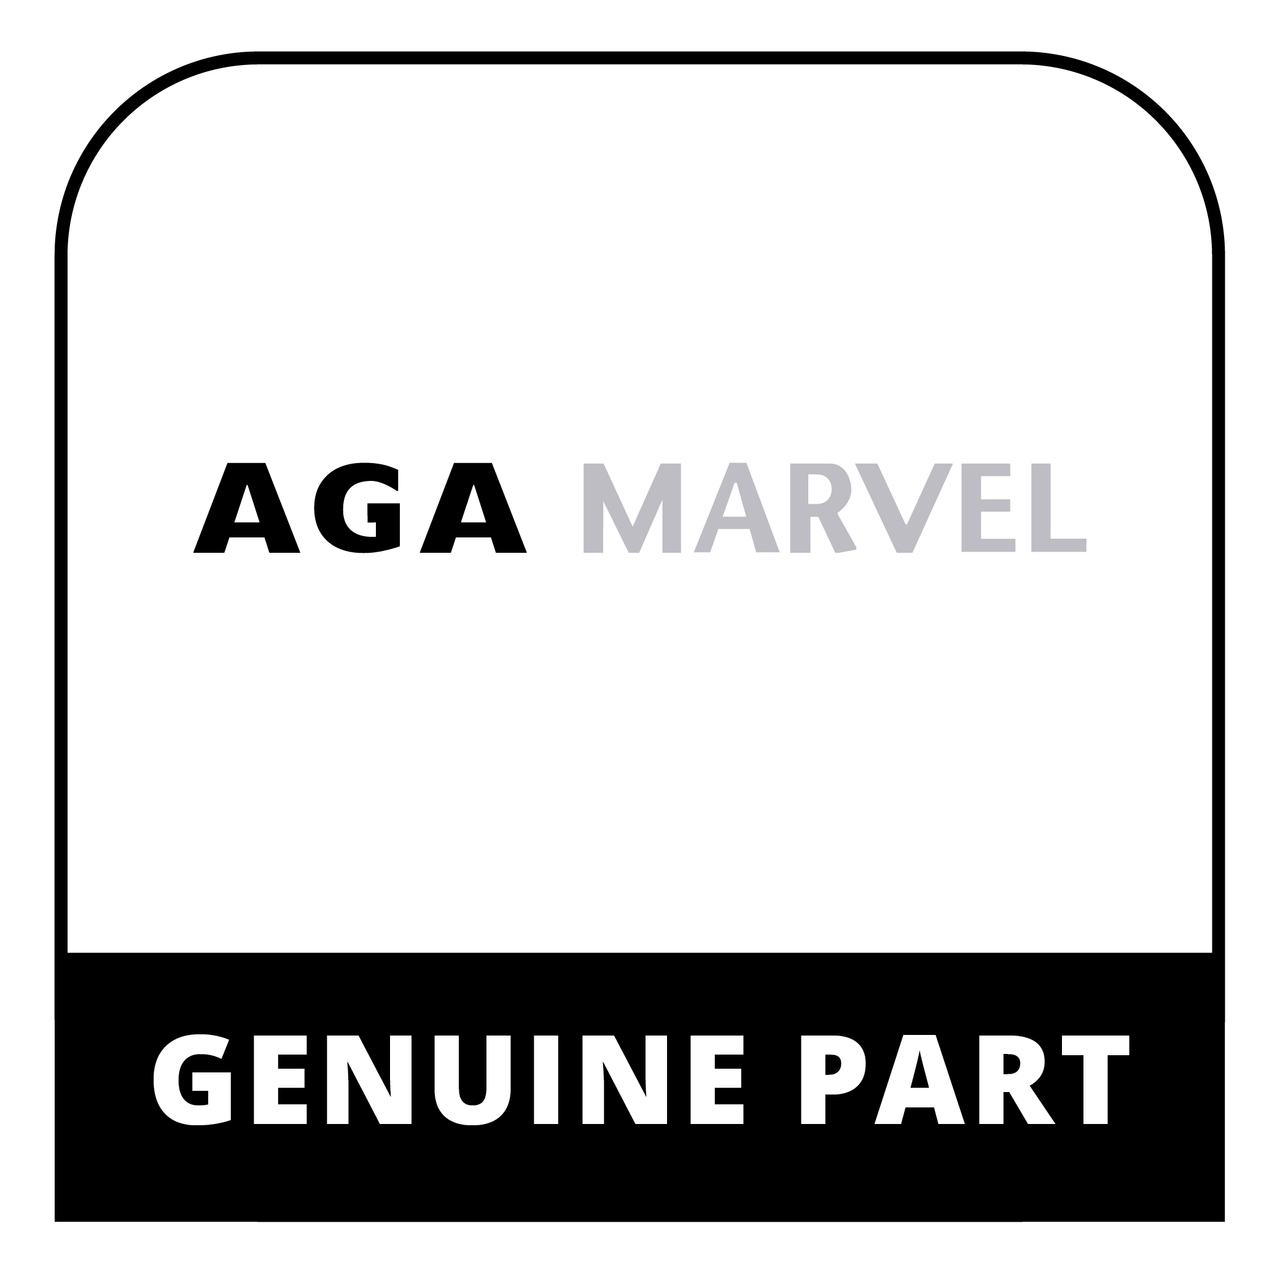 AGA Marvel F00915AXX - Fix Plate Rh - Donard/Brandon - Genuine AGA Marvel Part